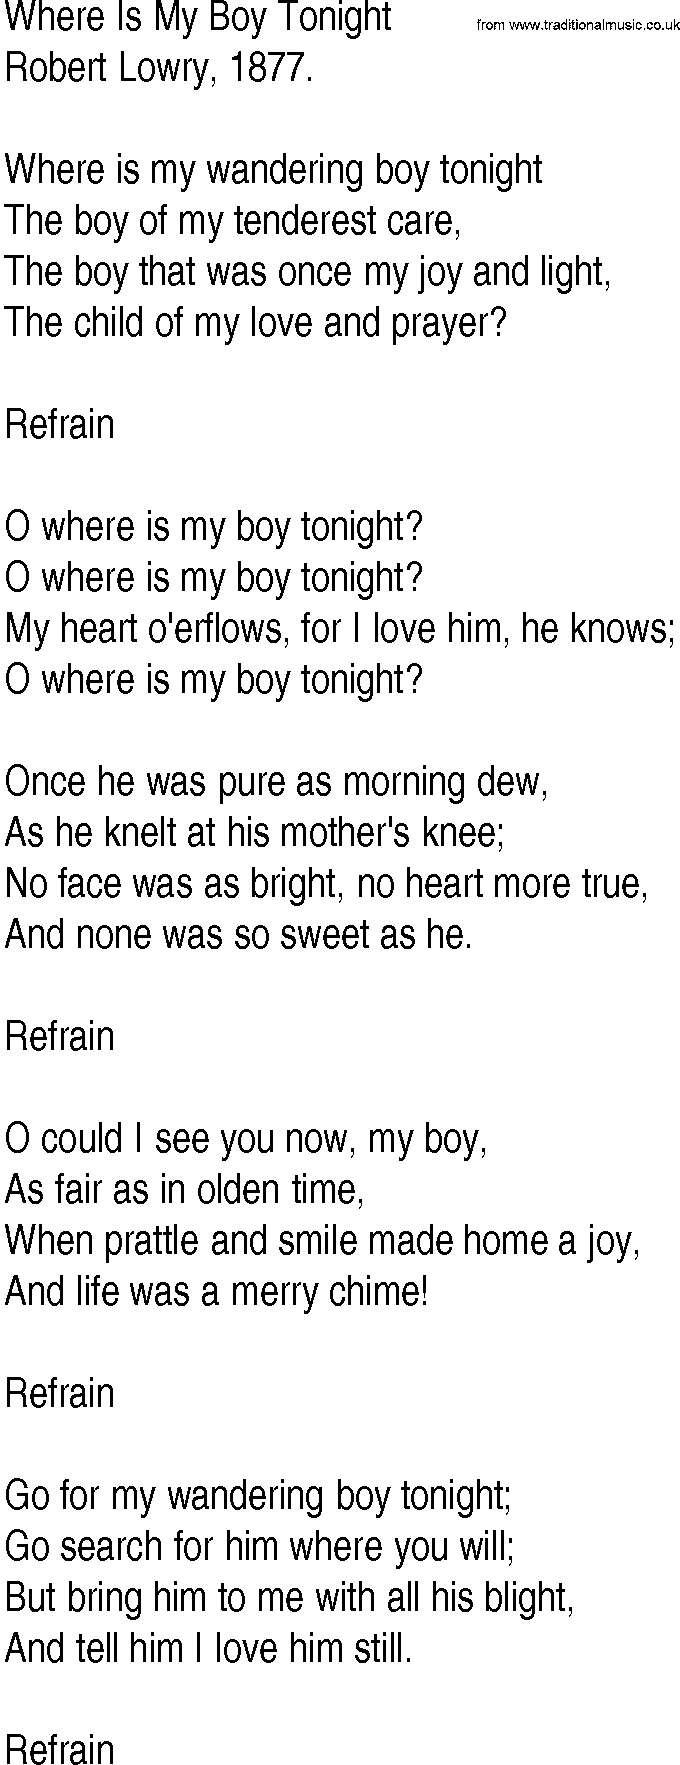 Hymn and Gospel Song: Where Is My Boy Tonight by Robert Lowry lyrics